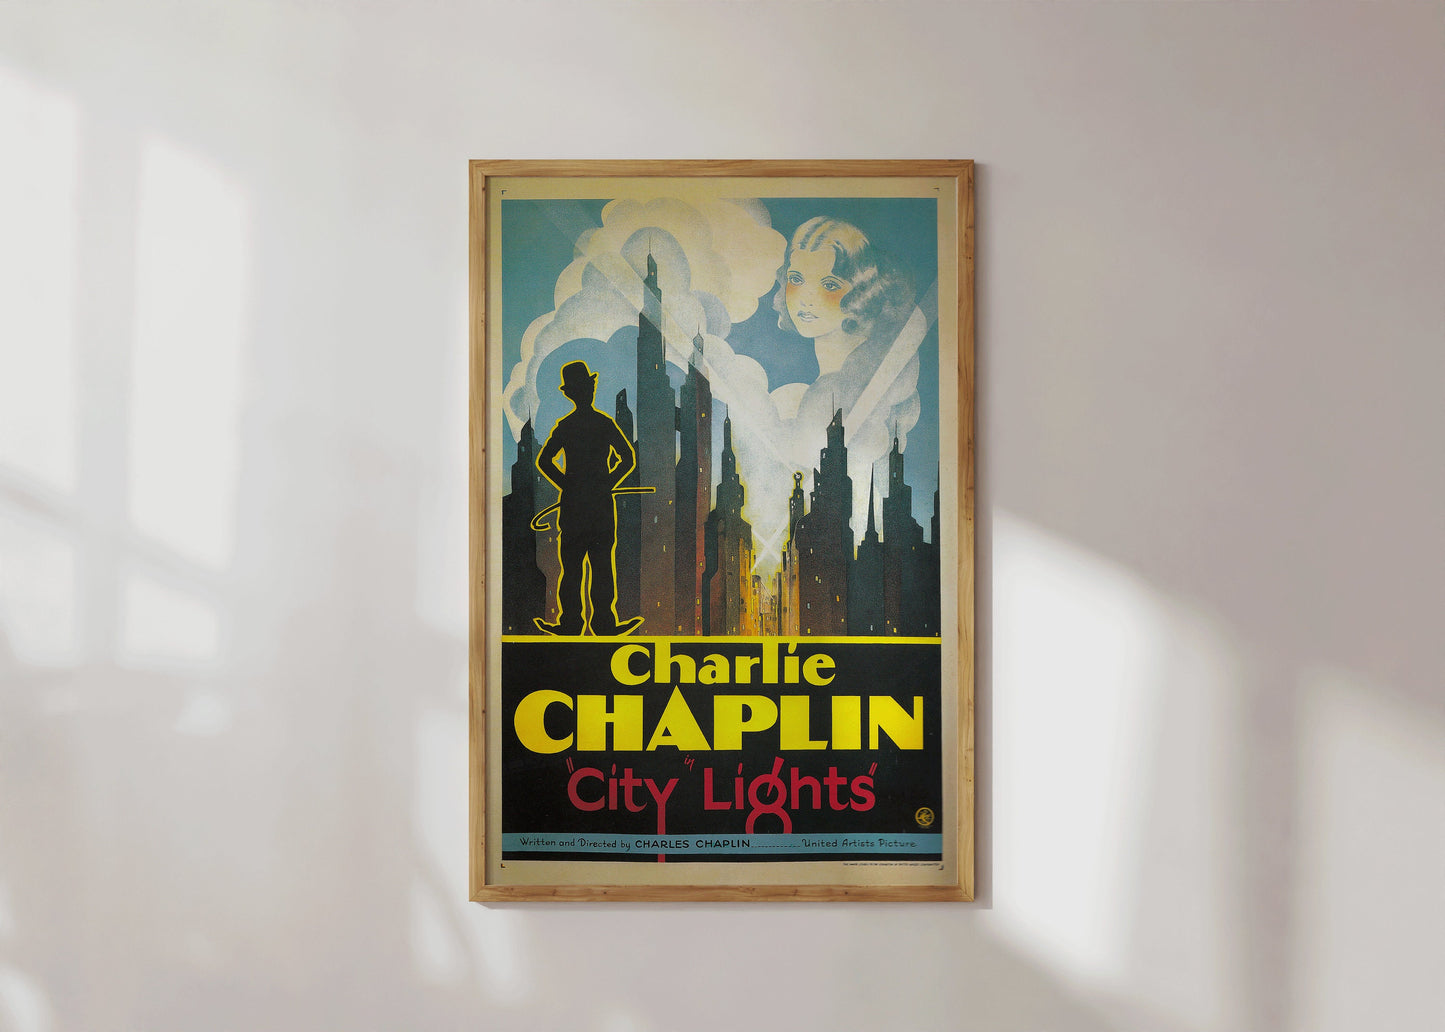 Charlie Chaplin - City Lights (1931) | Vintage Movie Poster (available framed or unframed)